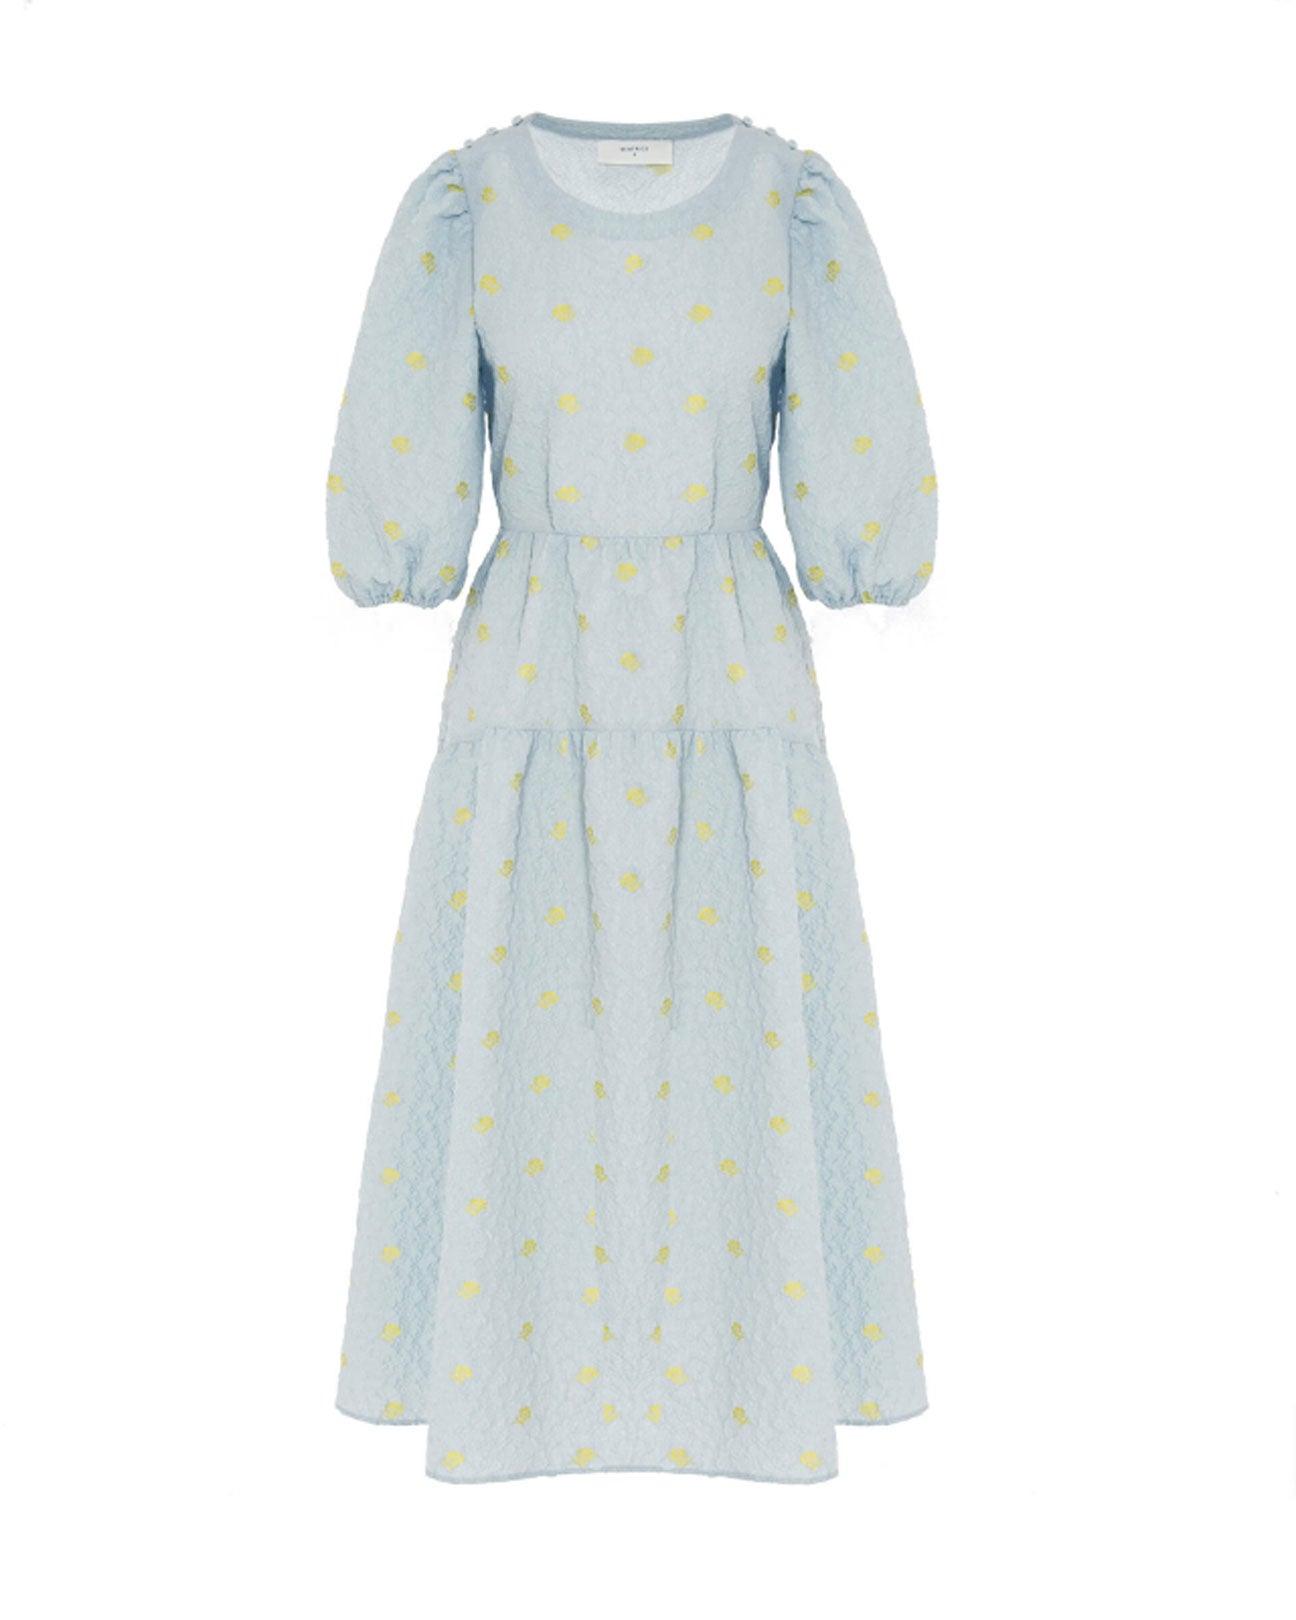 BEATRICE.B Embossed Jacquard Midi Dress in Zen Mist available at Lahn.shop